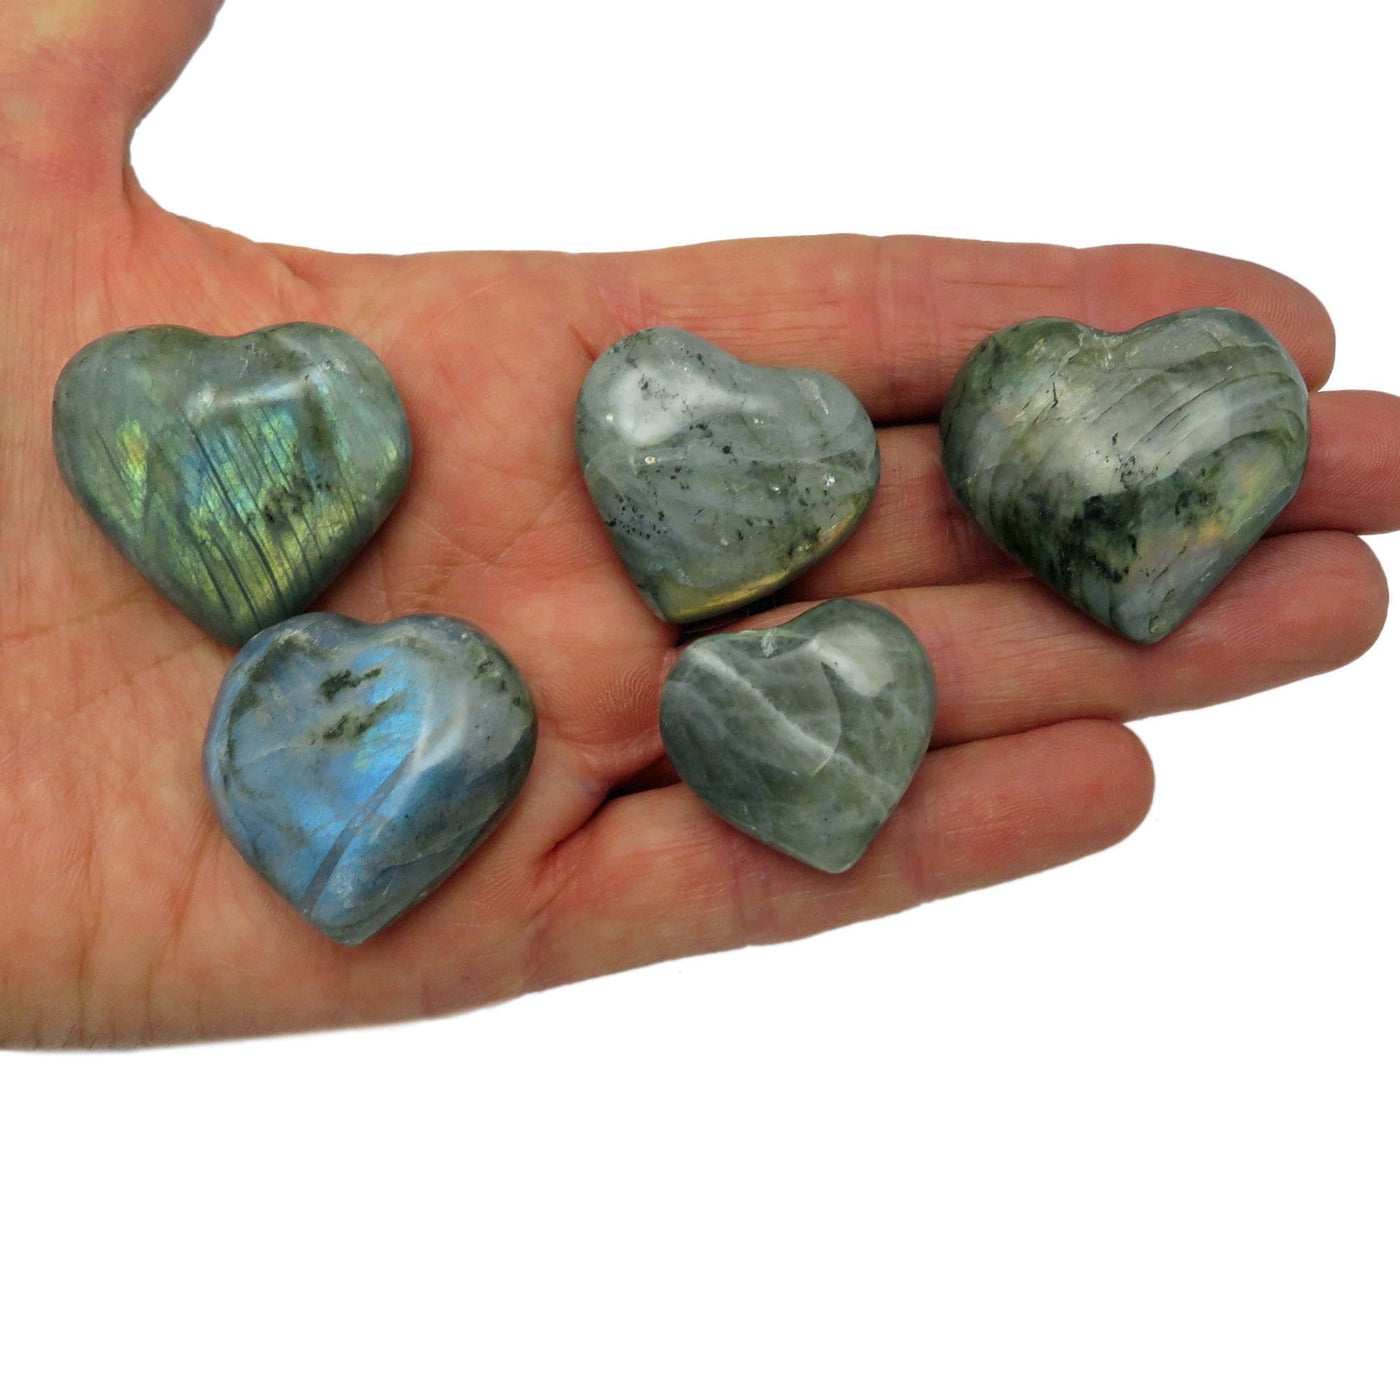 Labradorite Hearts on hand for size comparison